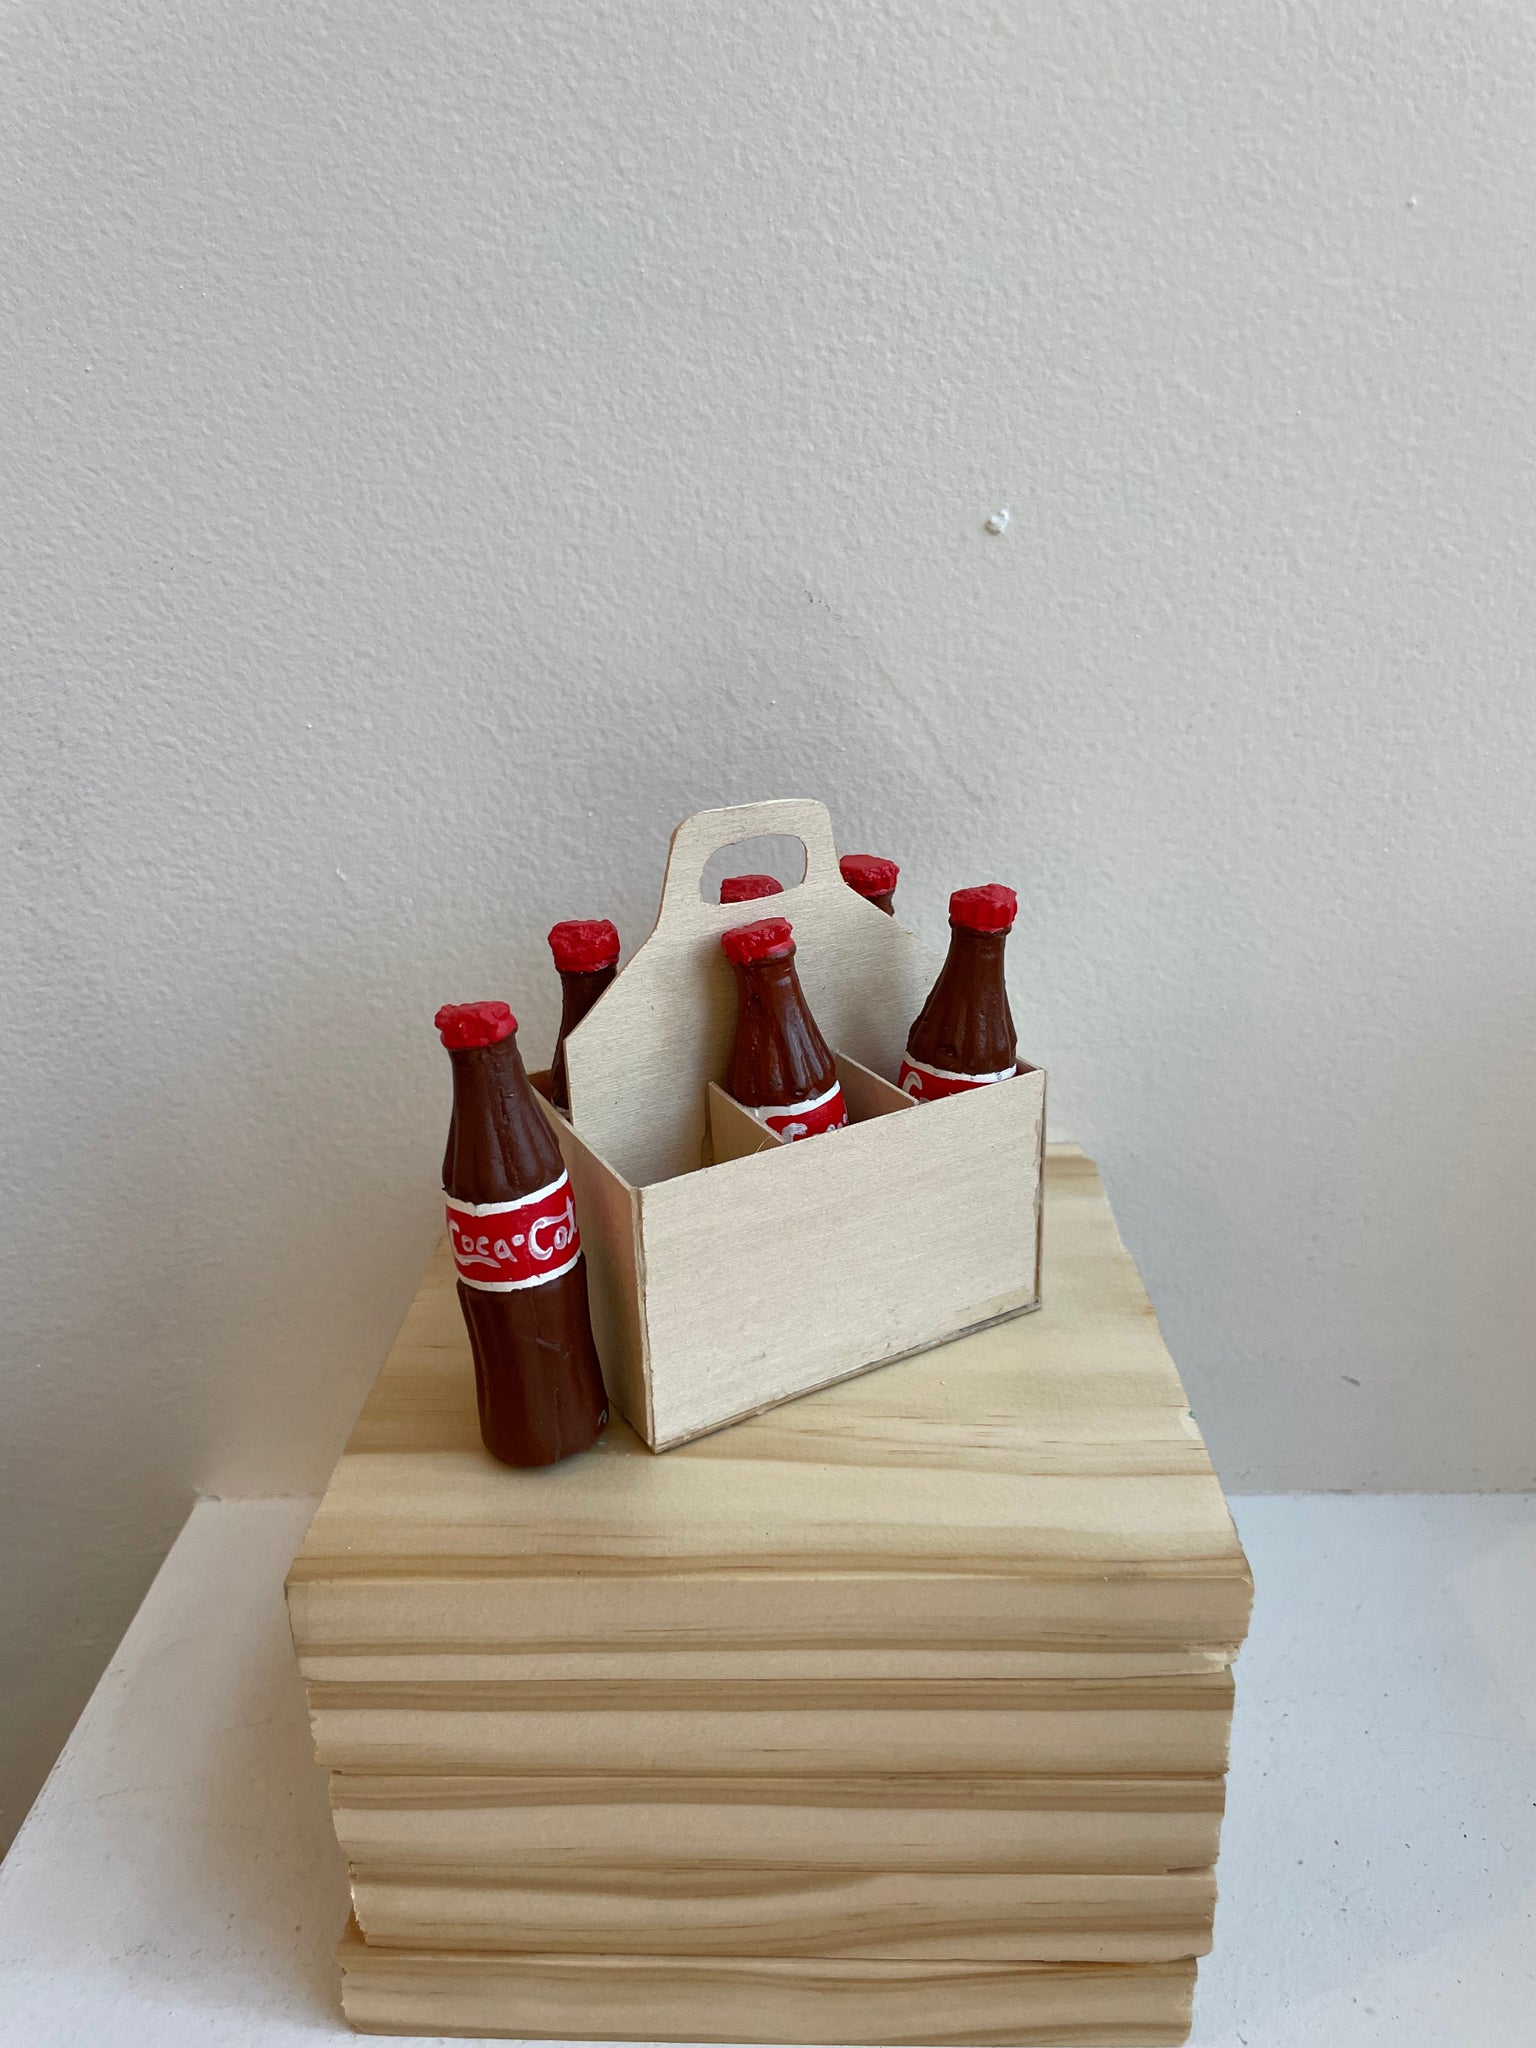 Noah Kloster, "Concrete Coke Bottles" SOLD